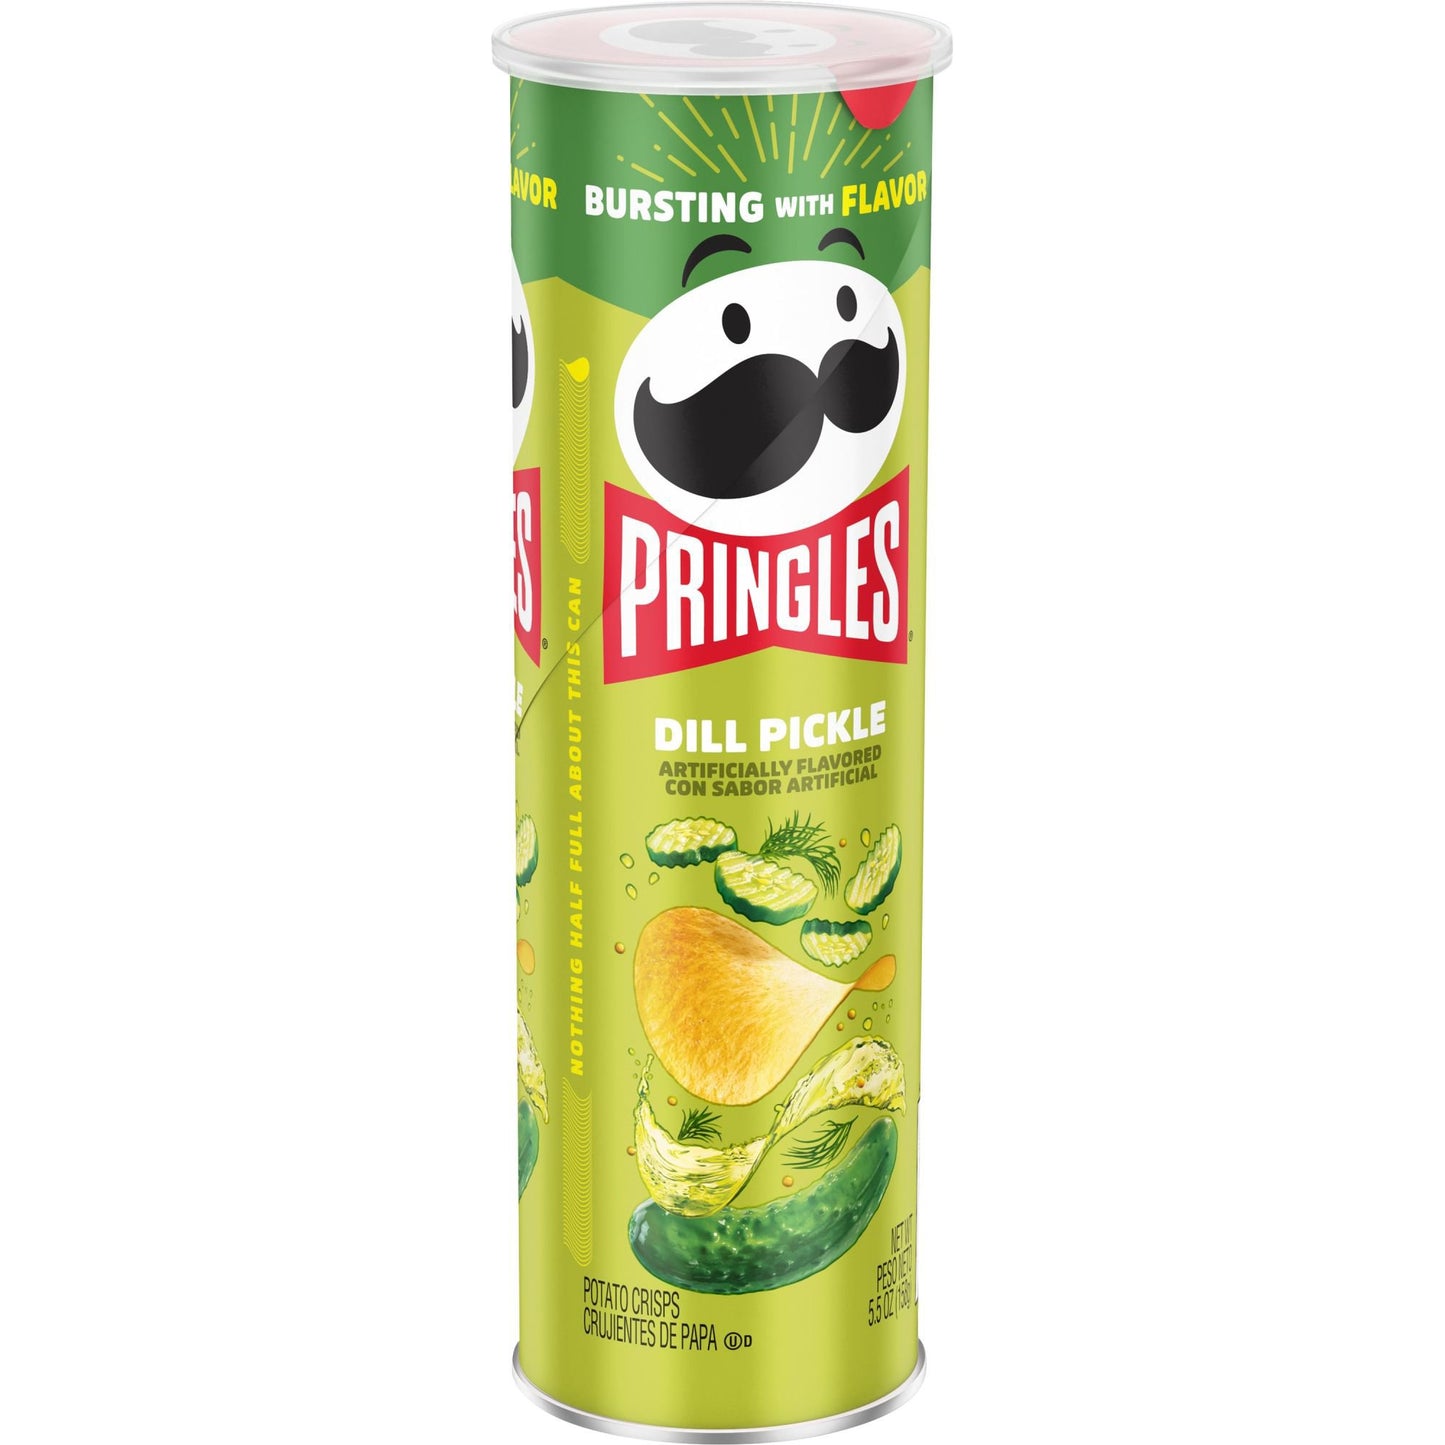 Pringles - Dill Pickle